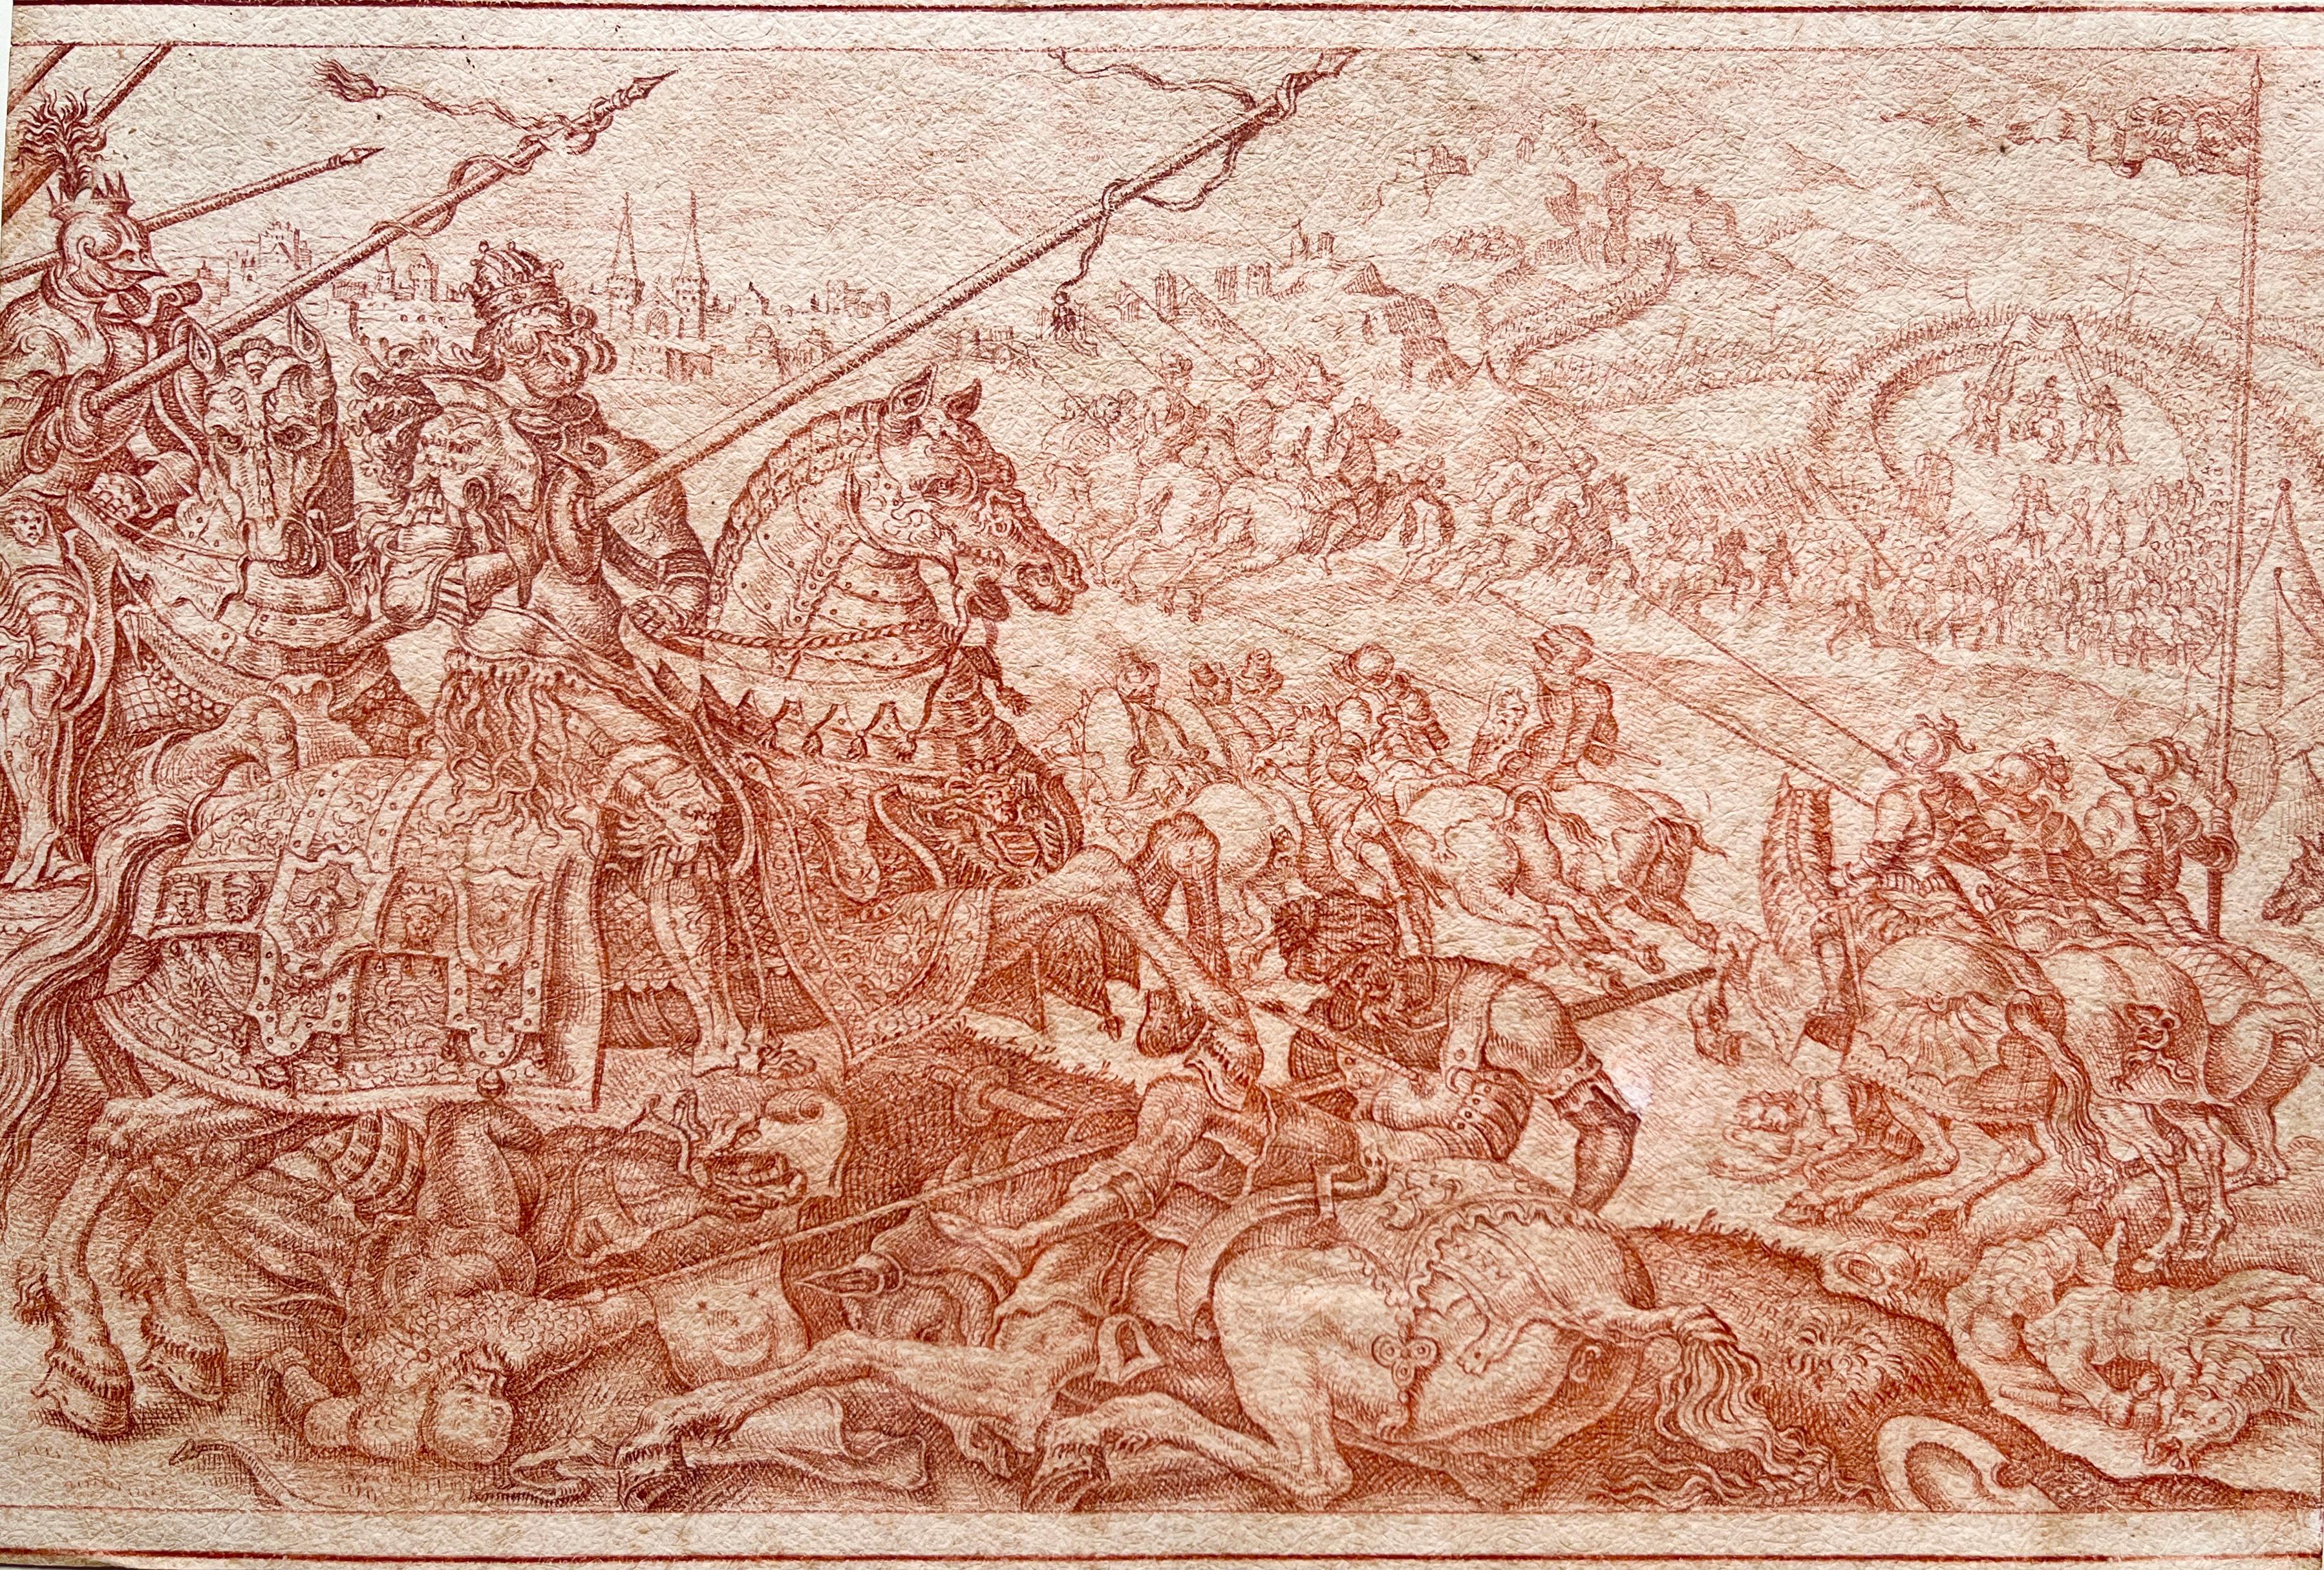 Red chalk Old Master Sketch of a Battle Scene after Maarten van Heemskerck

Follower of Maarten van Heemskerck
Netherlands; ca. 1600
Red chalk on laid paper; wood framed with burgundy velvet matte

Approximate size:  6.5 x 10 in. (drawing); 12 x 15